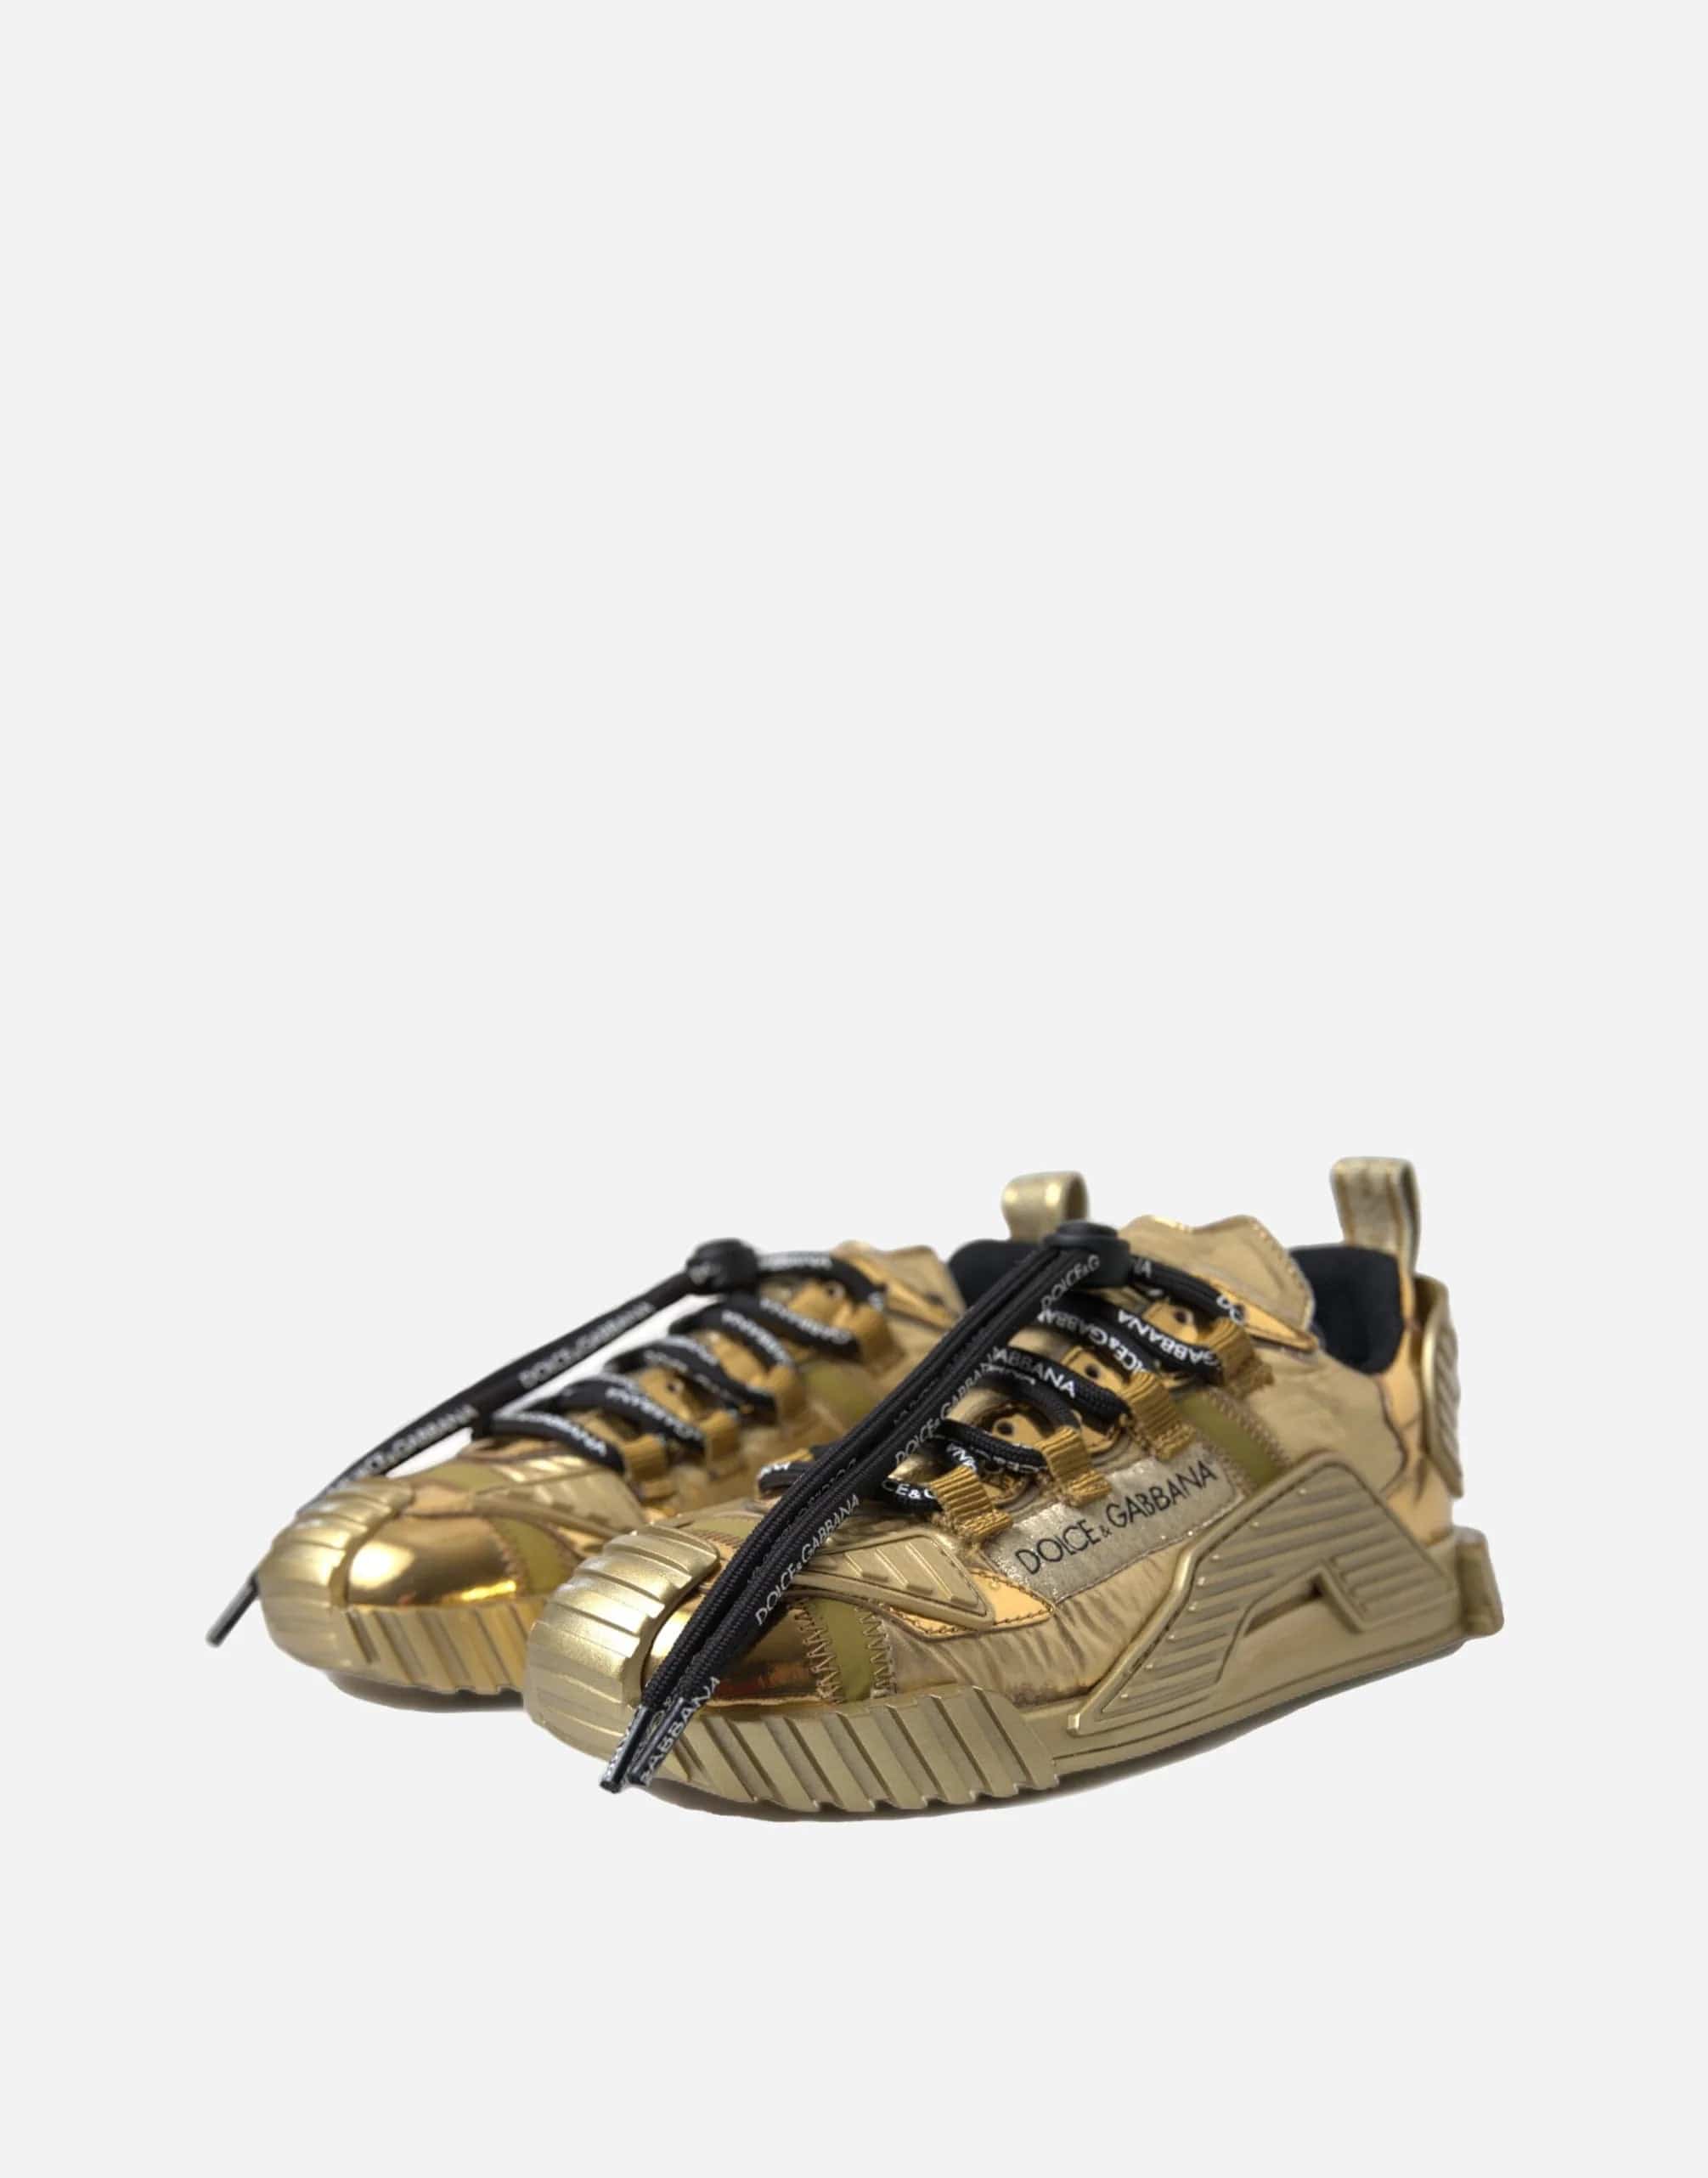 Dolce & Gabbana Metallic NS1 Low Top Sneakers